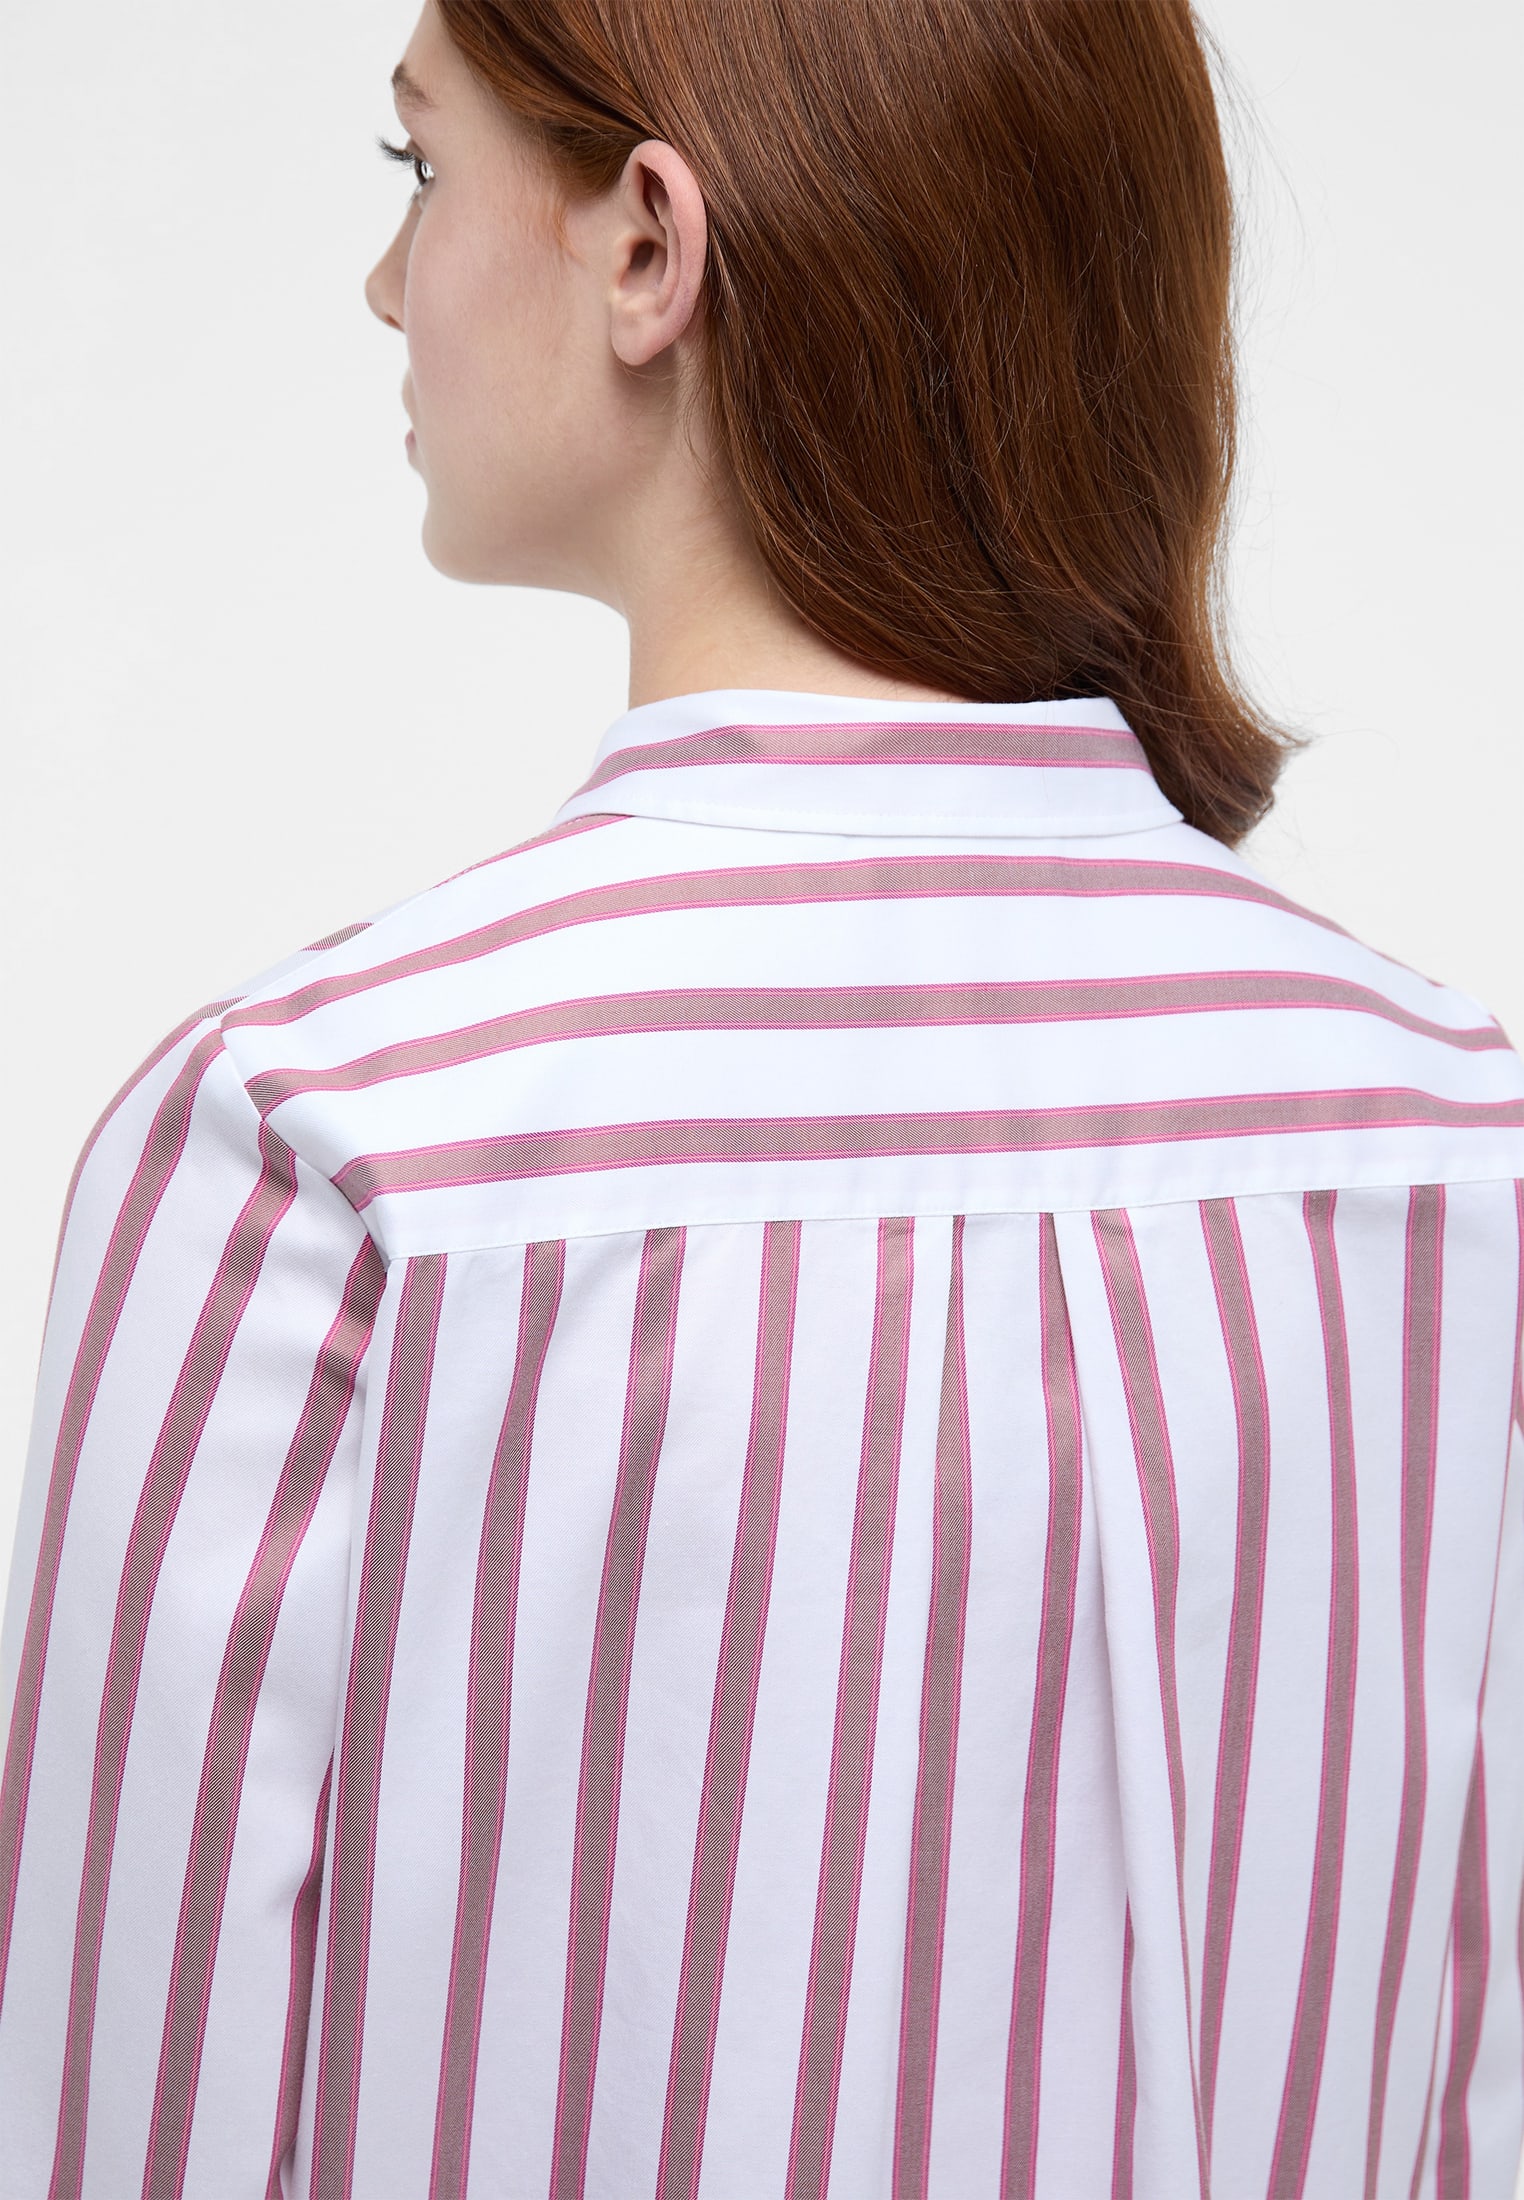 Soft Luxury Shirt Bluse in pink gestreift | pink | 46 | Langarm |  2BL04213-15-21-46-1/1